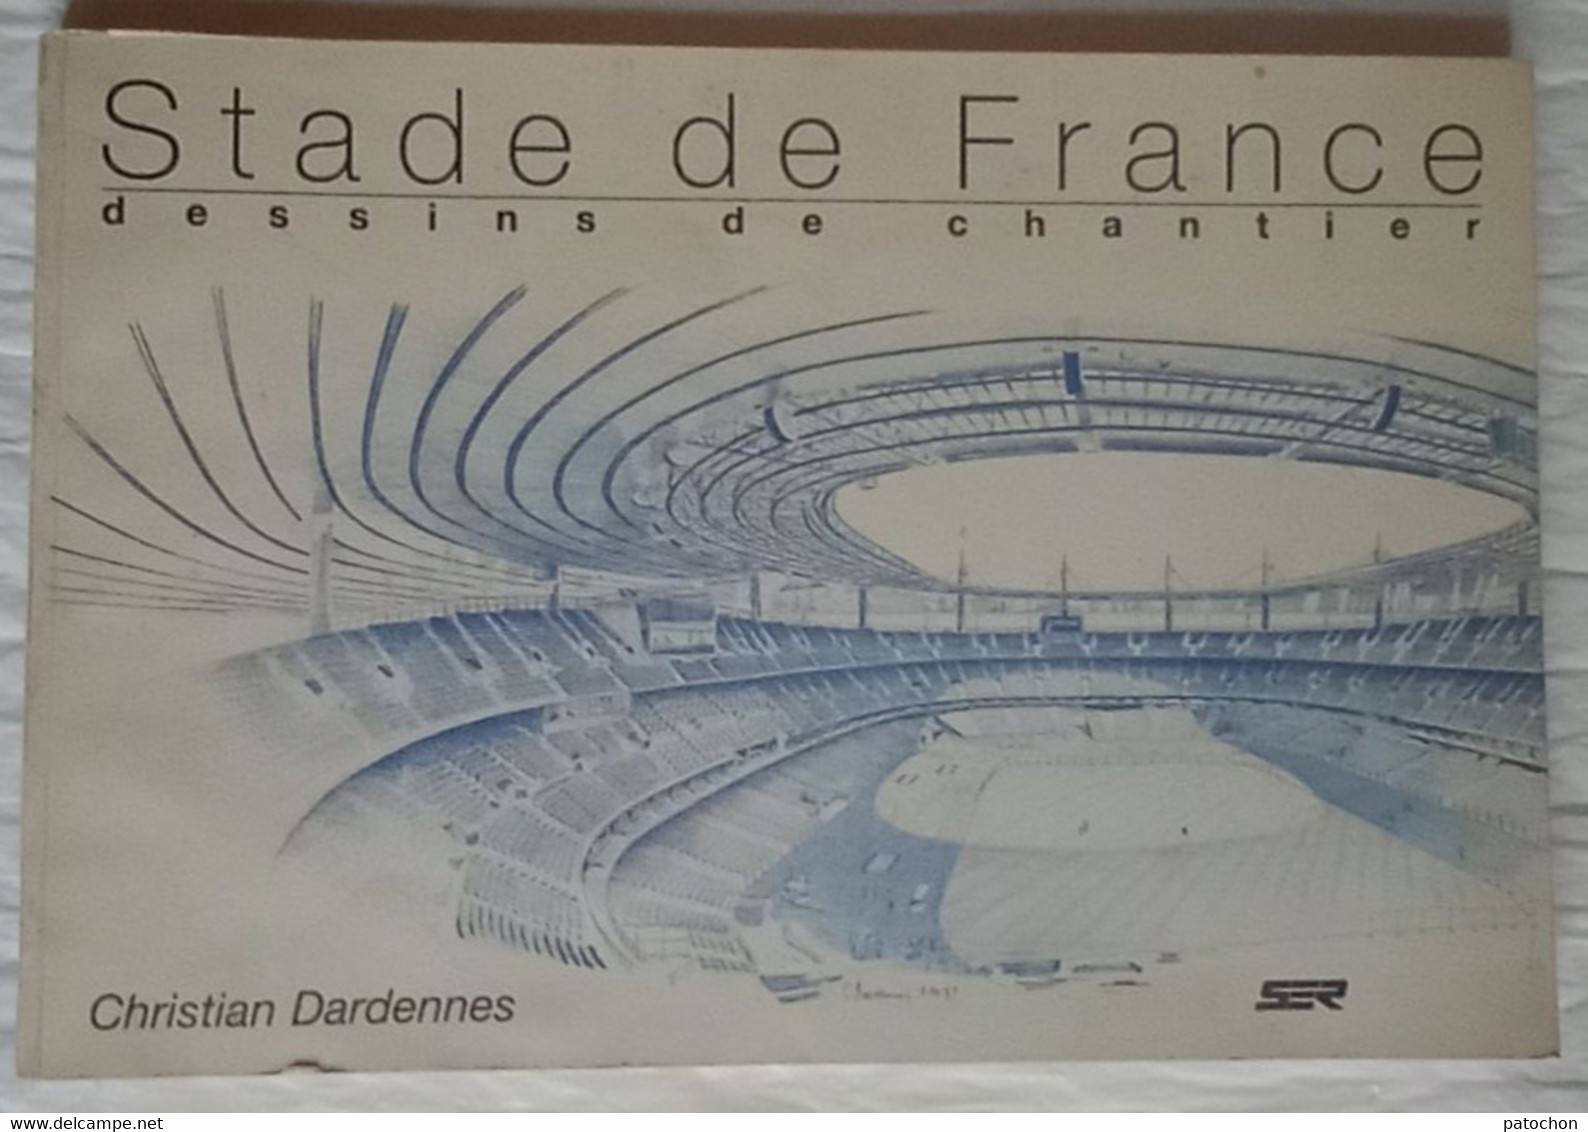 Livret 112 Pages Dessins Chantier Stade De France Christian Dardennes 21x32cm.! - Contemporary Art